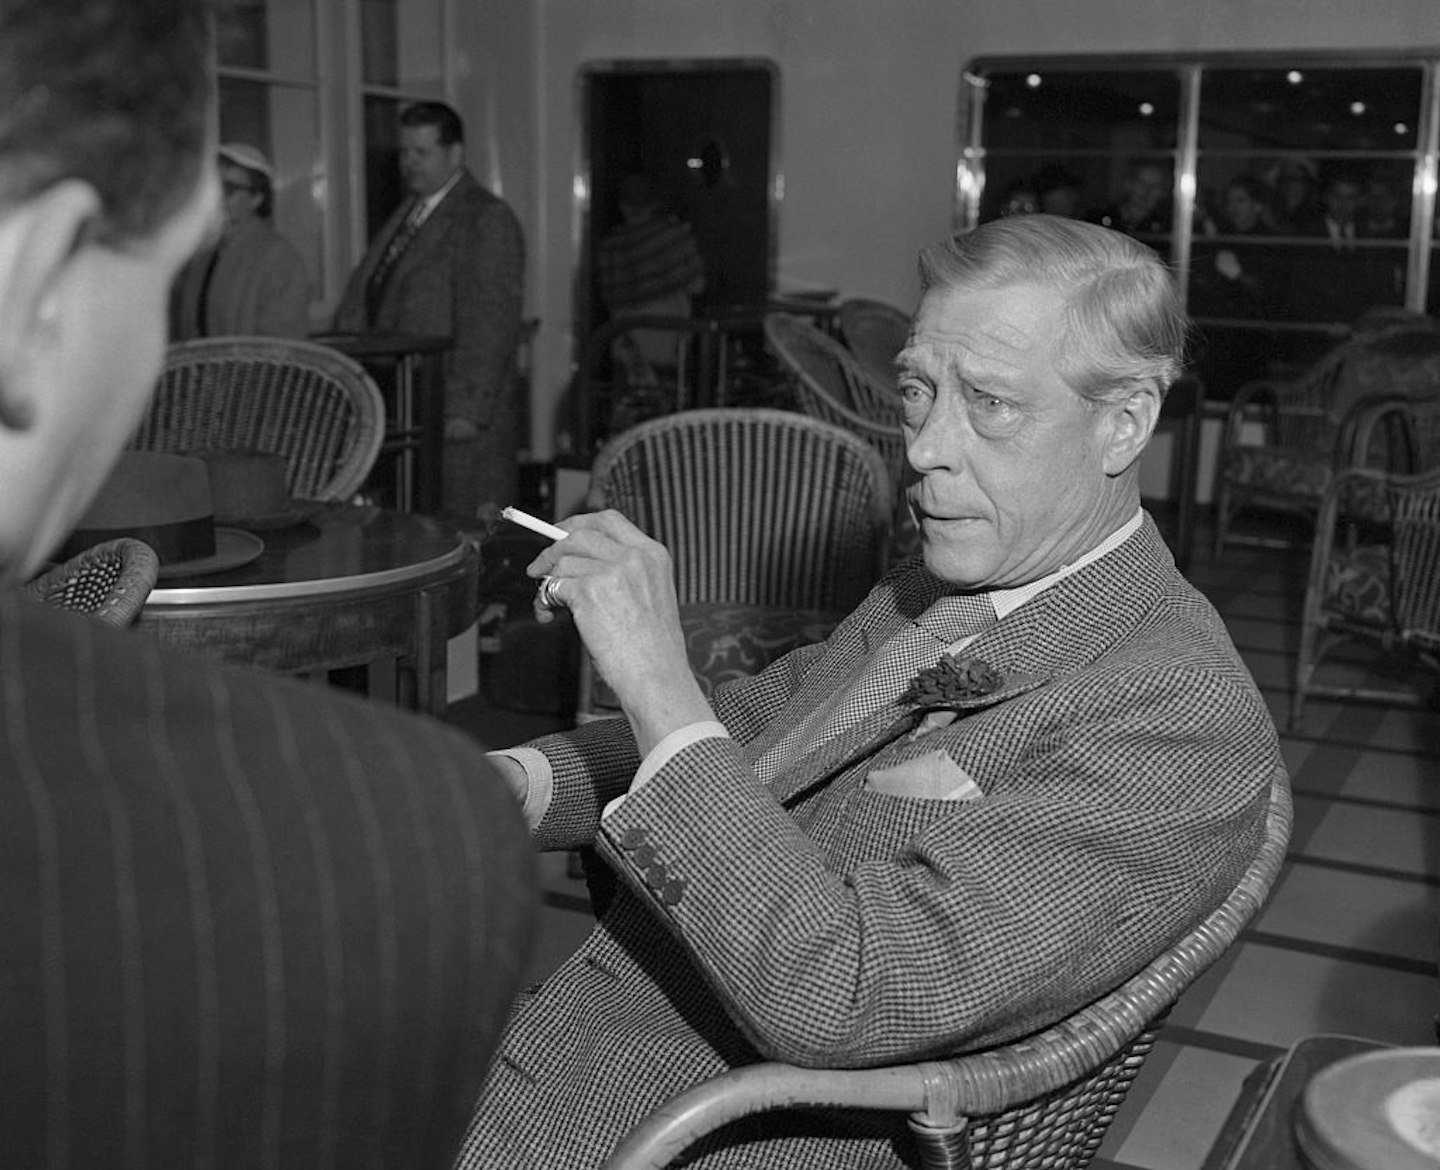 The Duke of Windsor in the 1950s